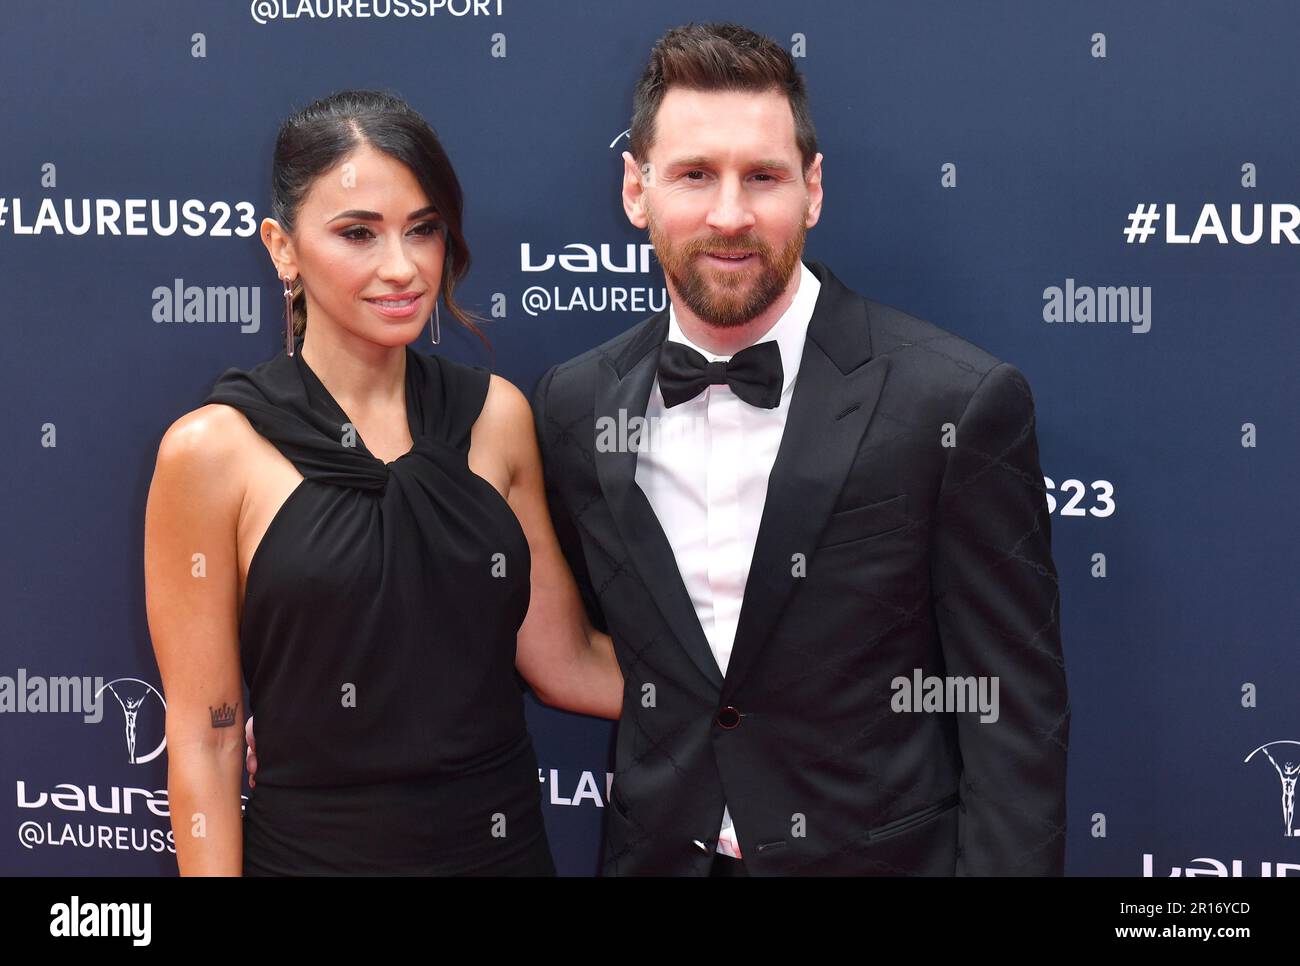 Lionel Messi and wife Antonella Roccuzzo arrives at the 2023 Laureus World Sport Awards Paris red carpet arrivals at Cour Vendome Stock Photo